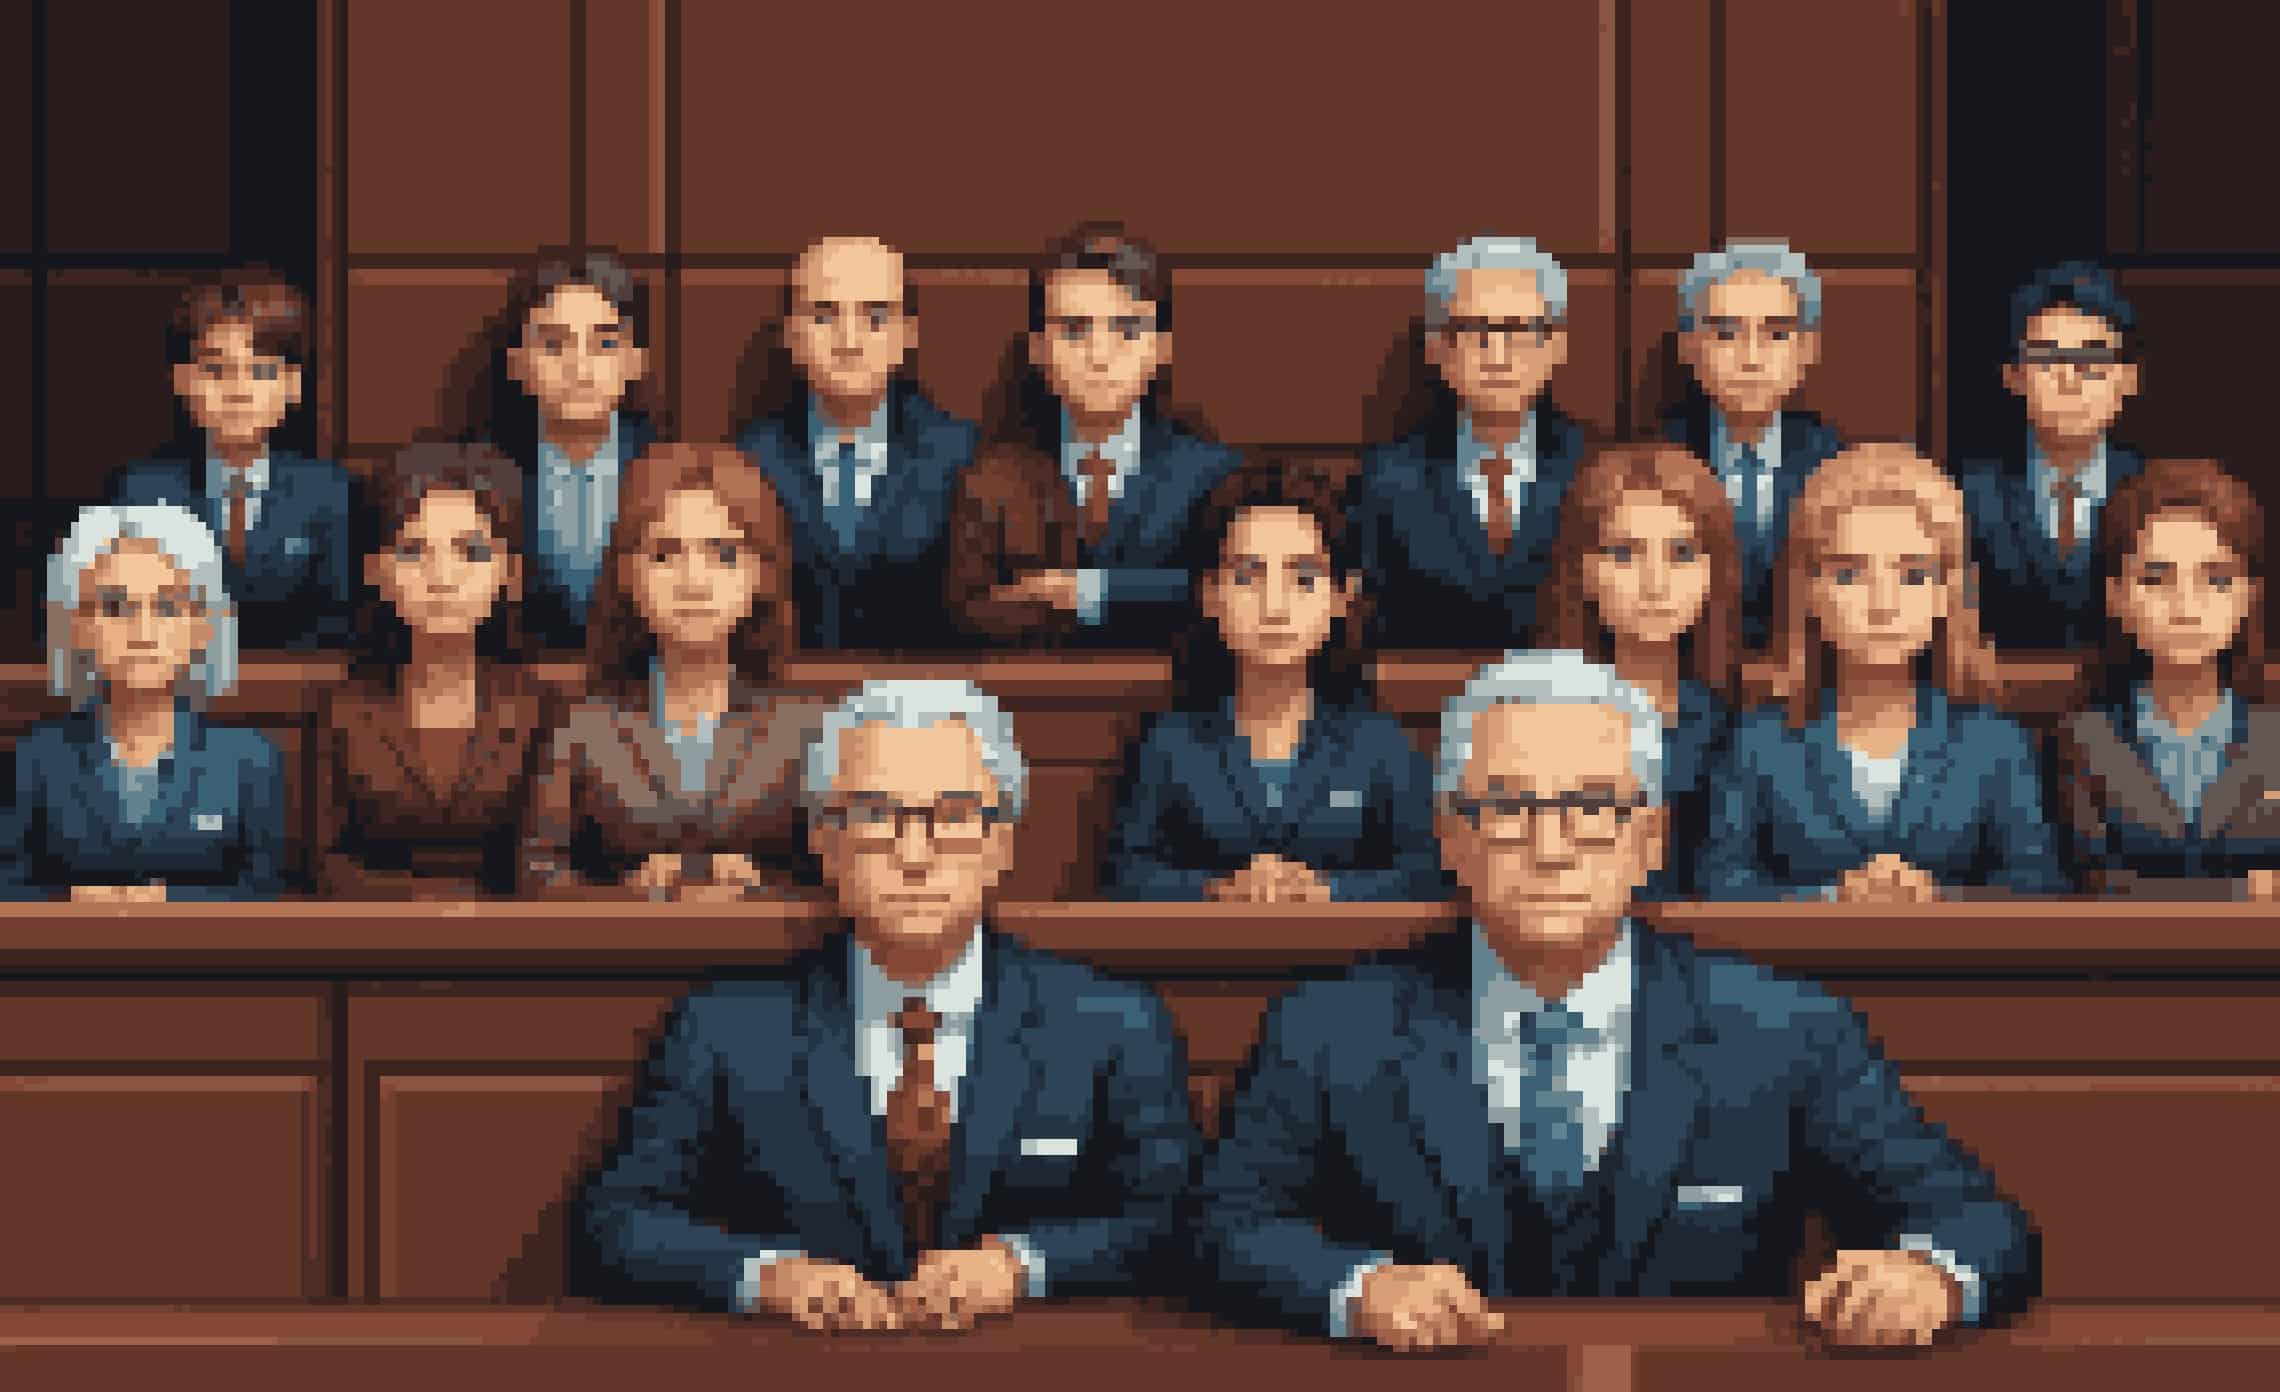 12 Jurors In The Jury Box